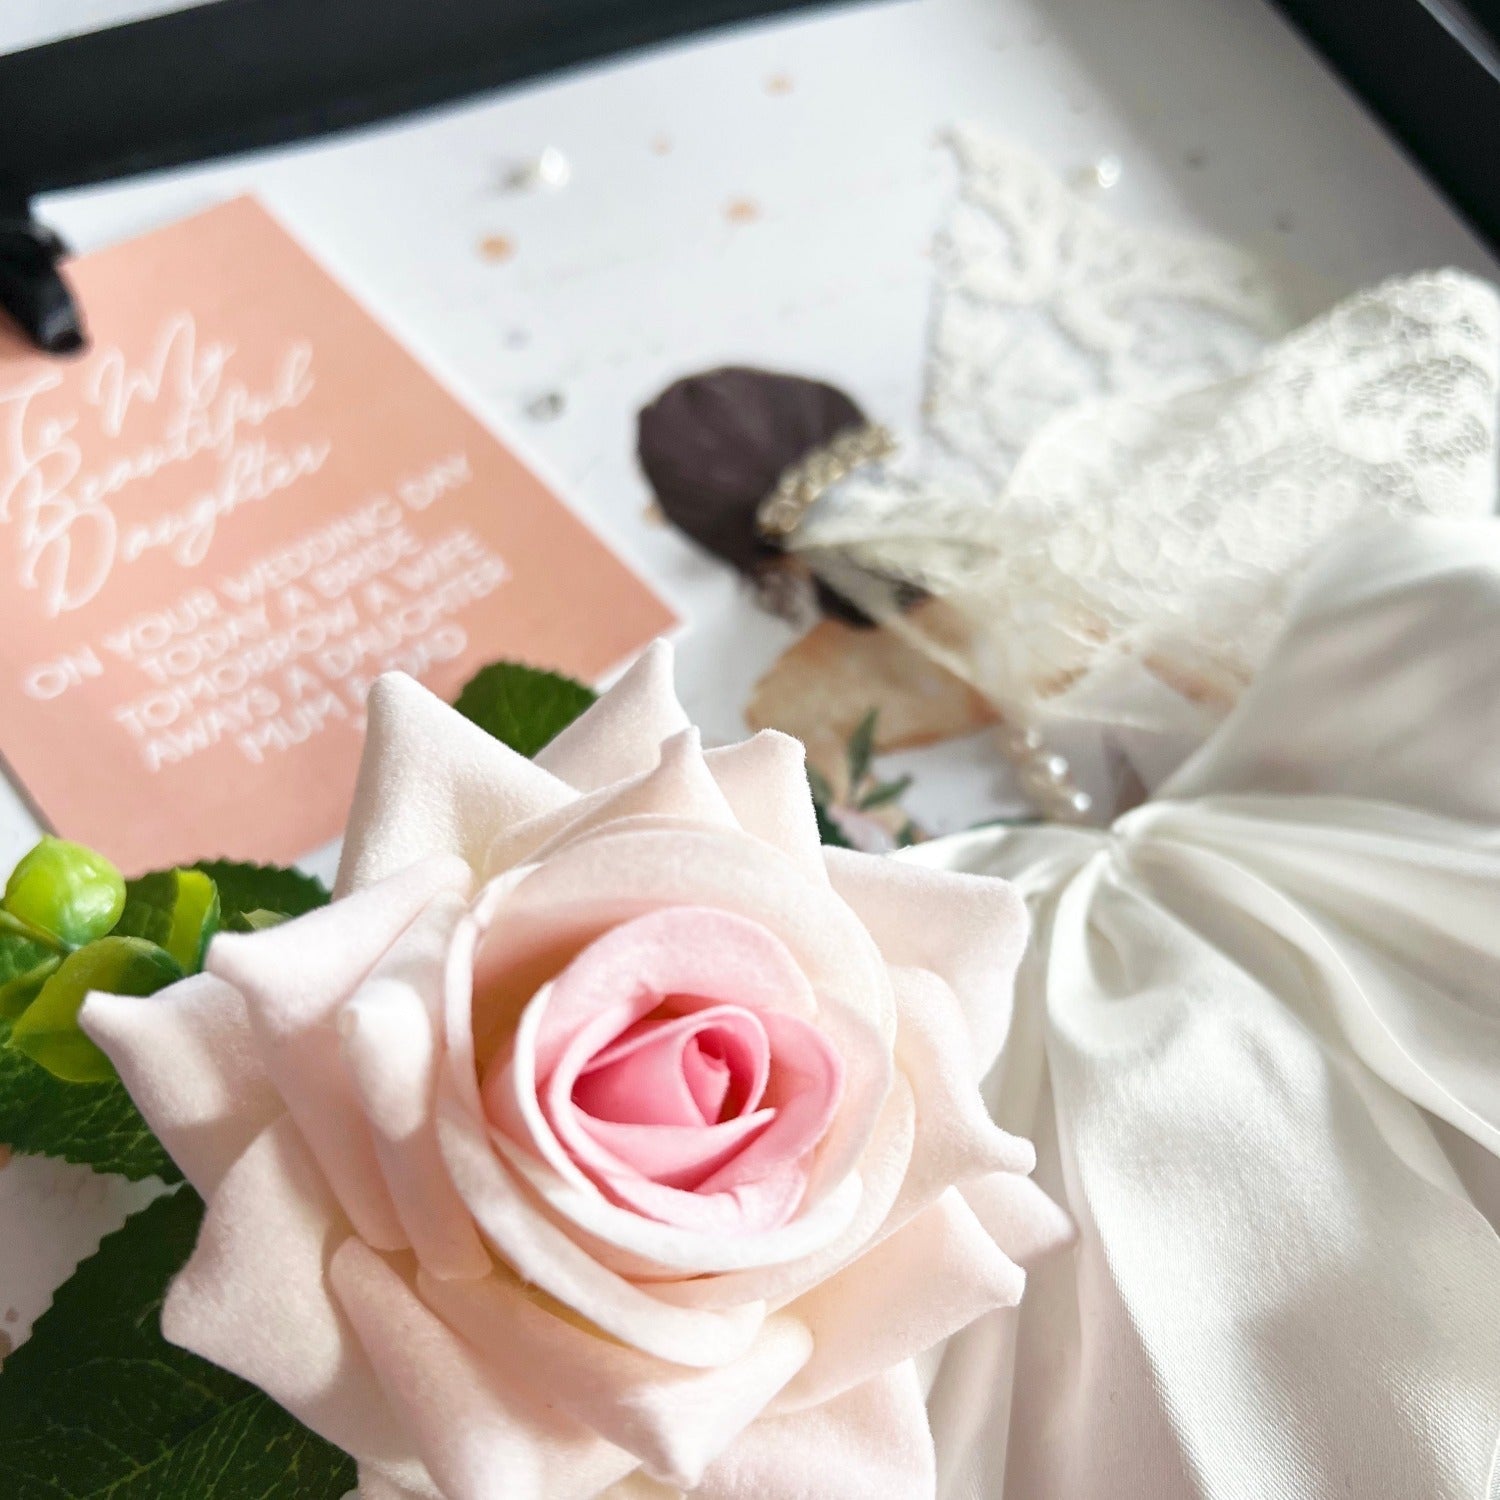 Blush rose wedding card for my Granddaughter | Luxury keepsake wedding cards personalised with wording